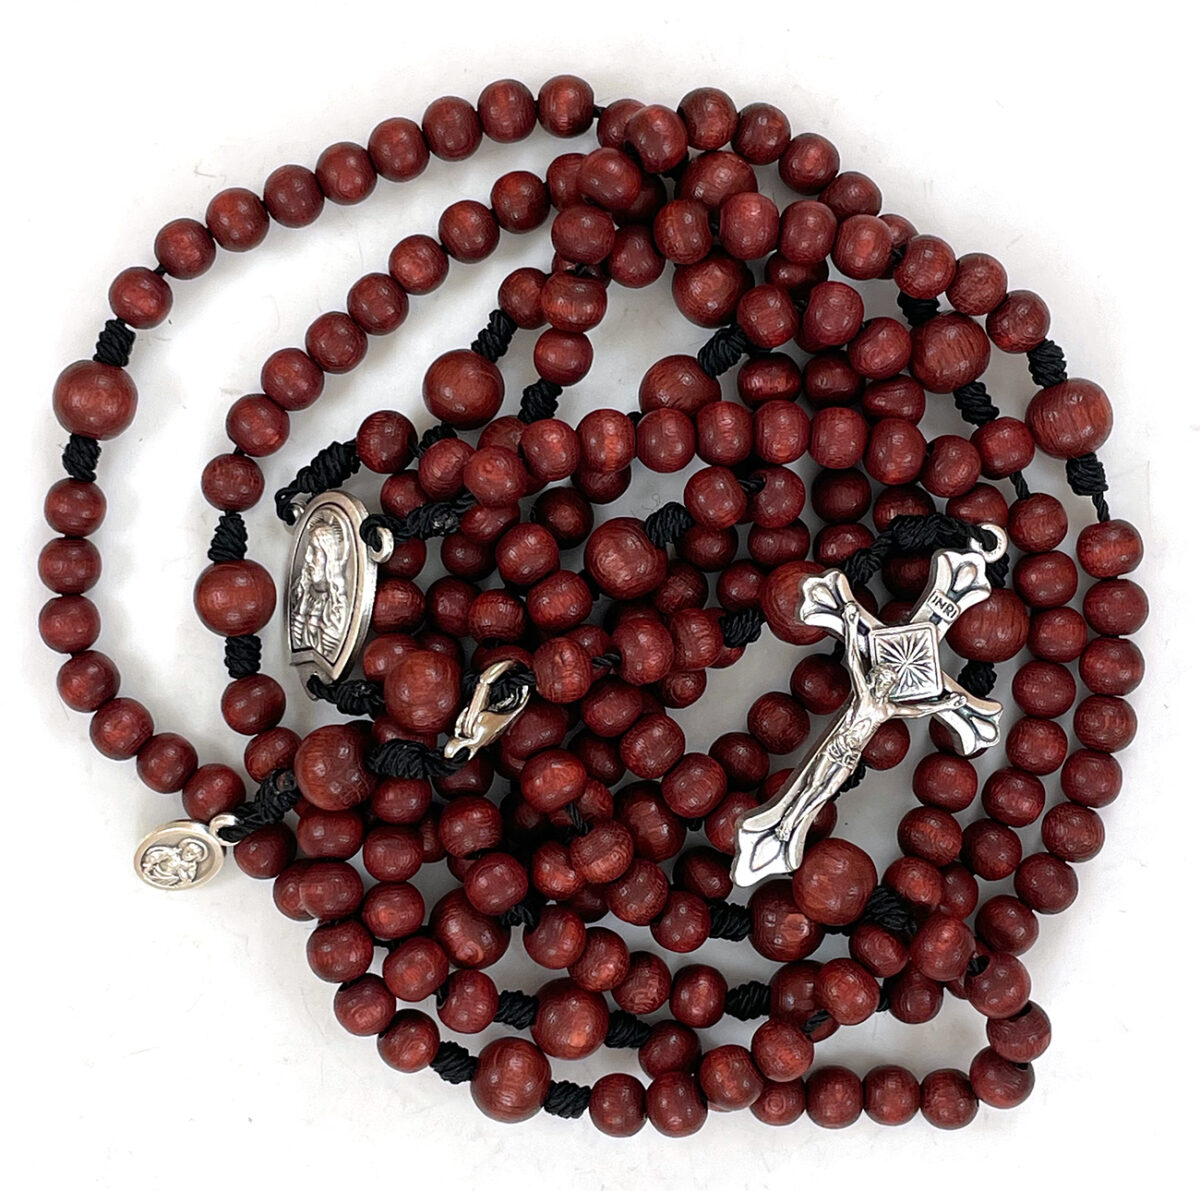 20-Decade Rosary ($31.99 CAD)